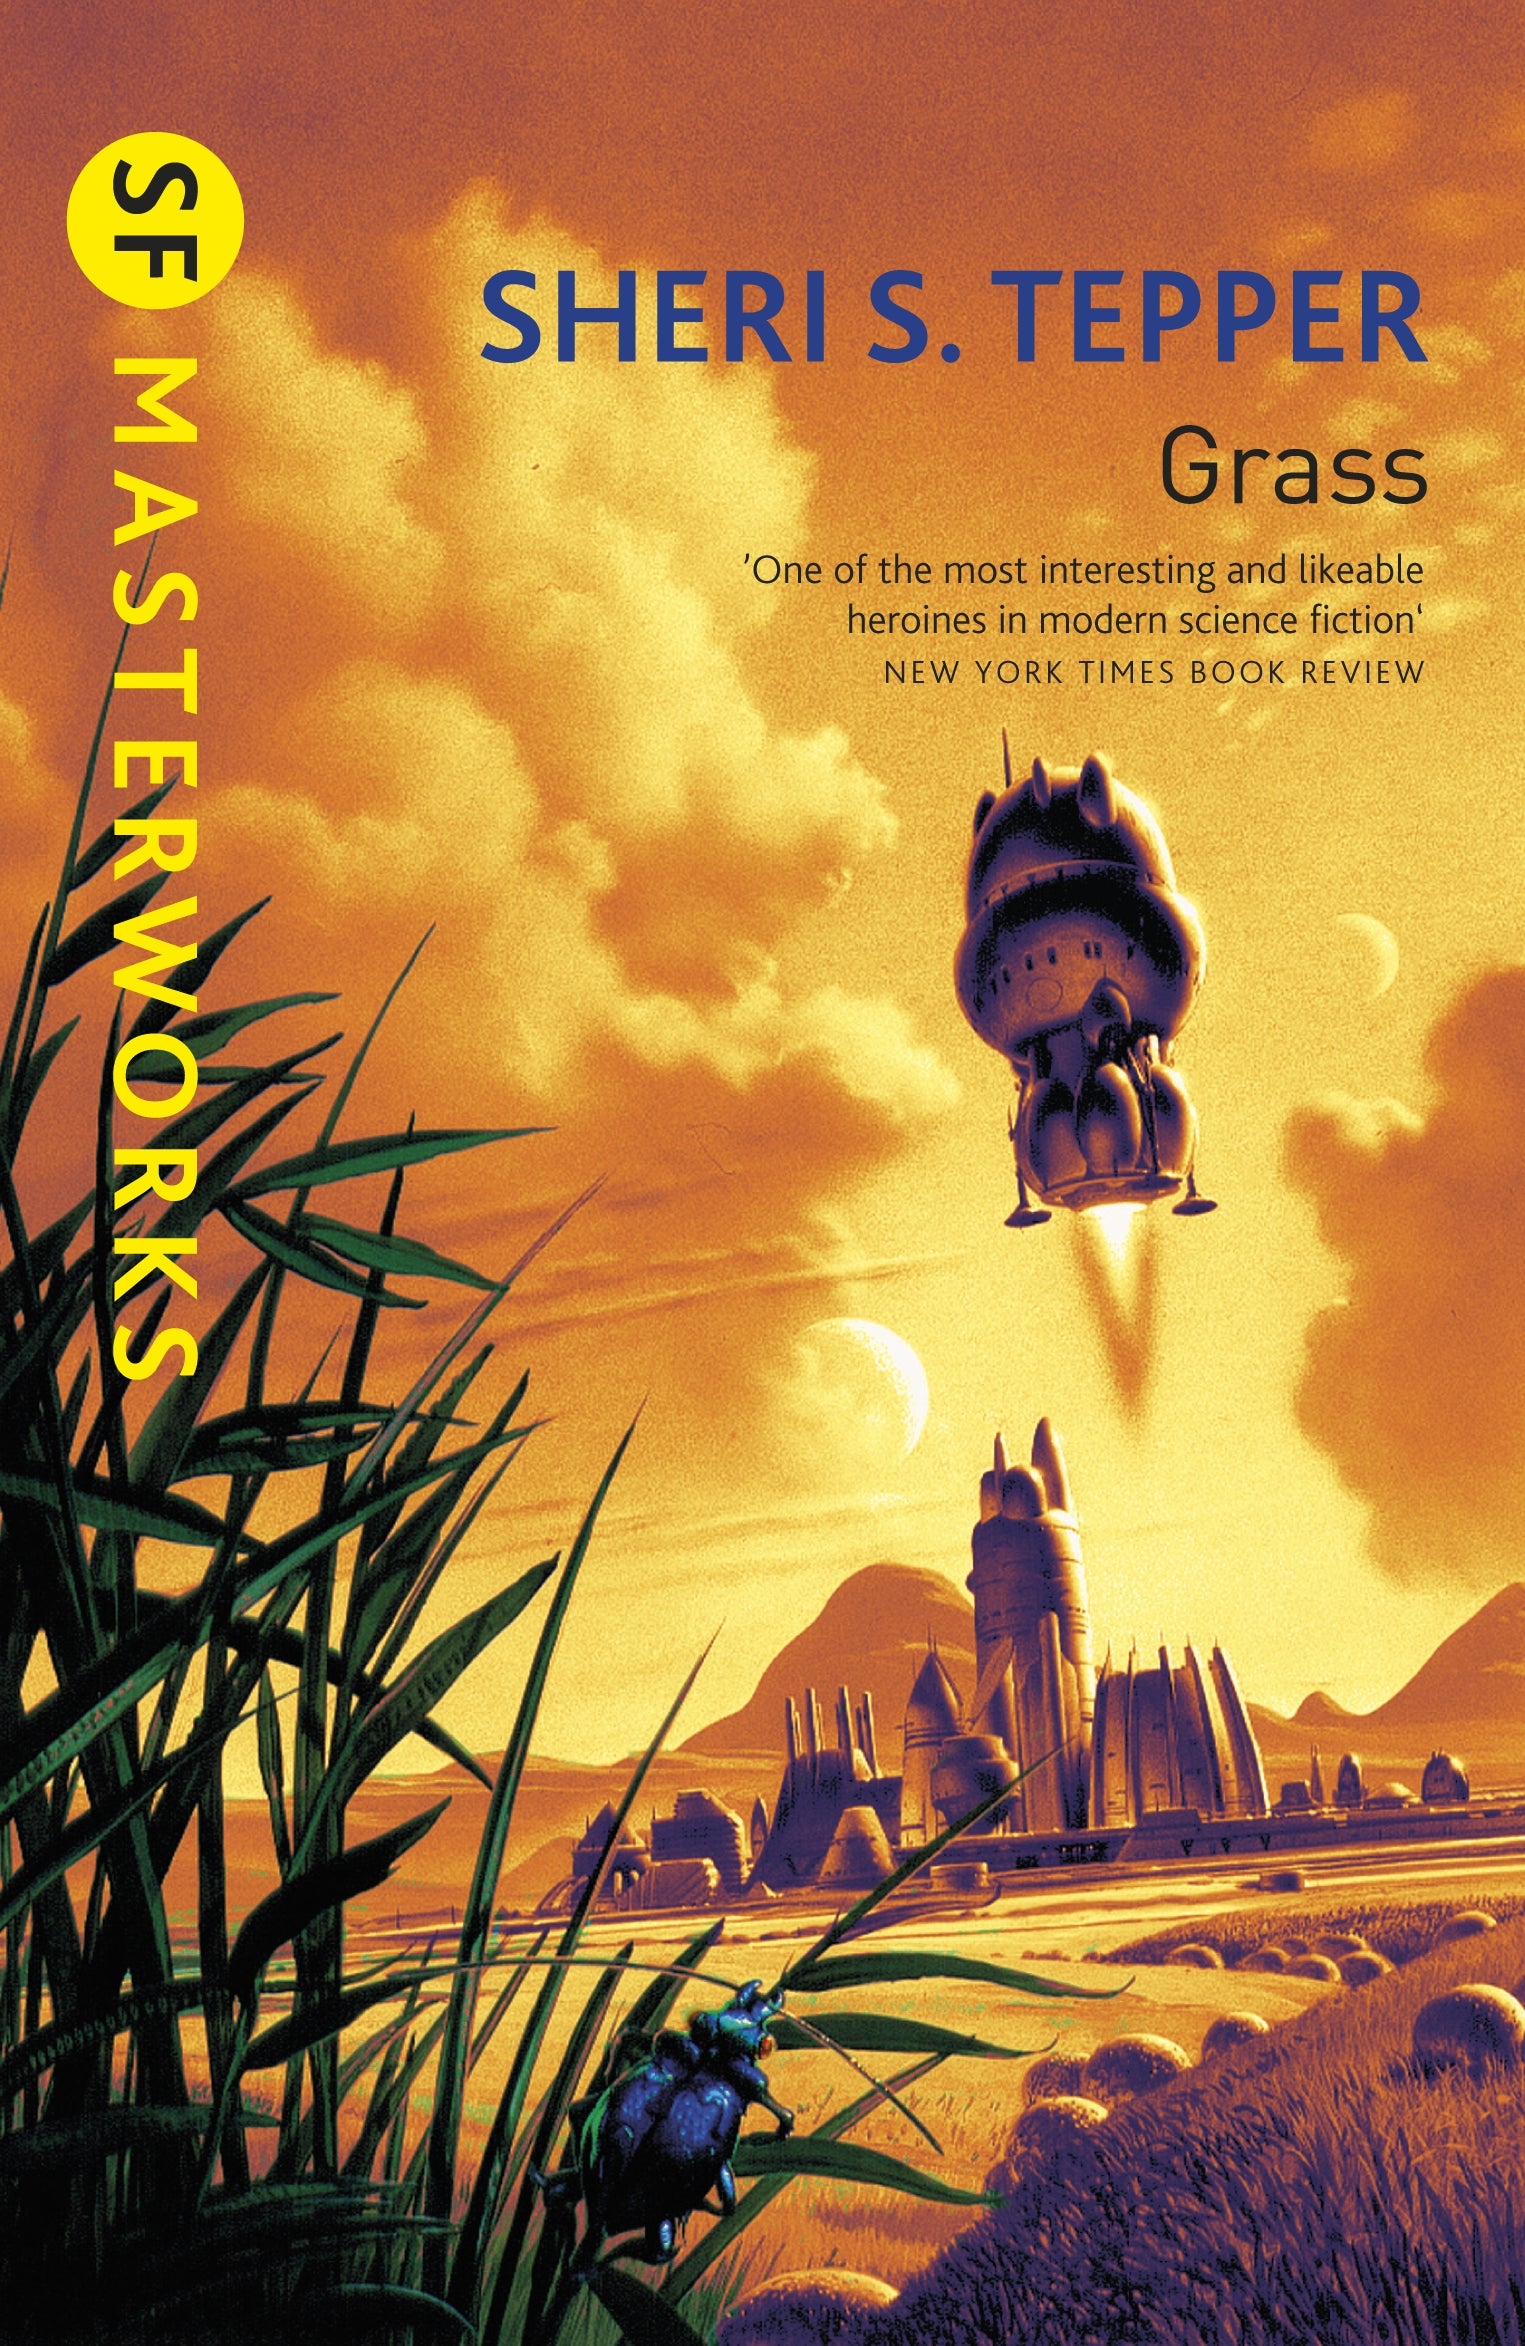 Grass by Sheri S. Tepper